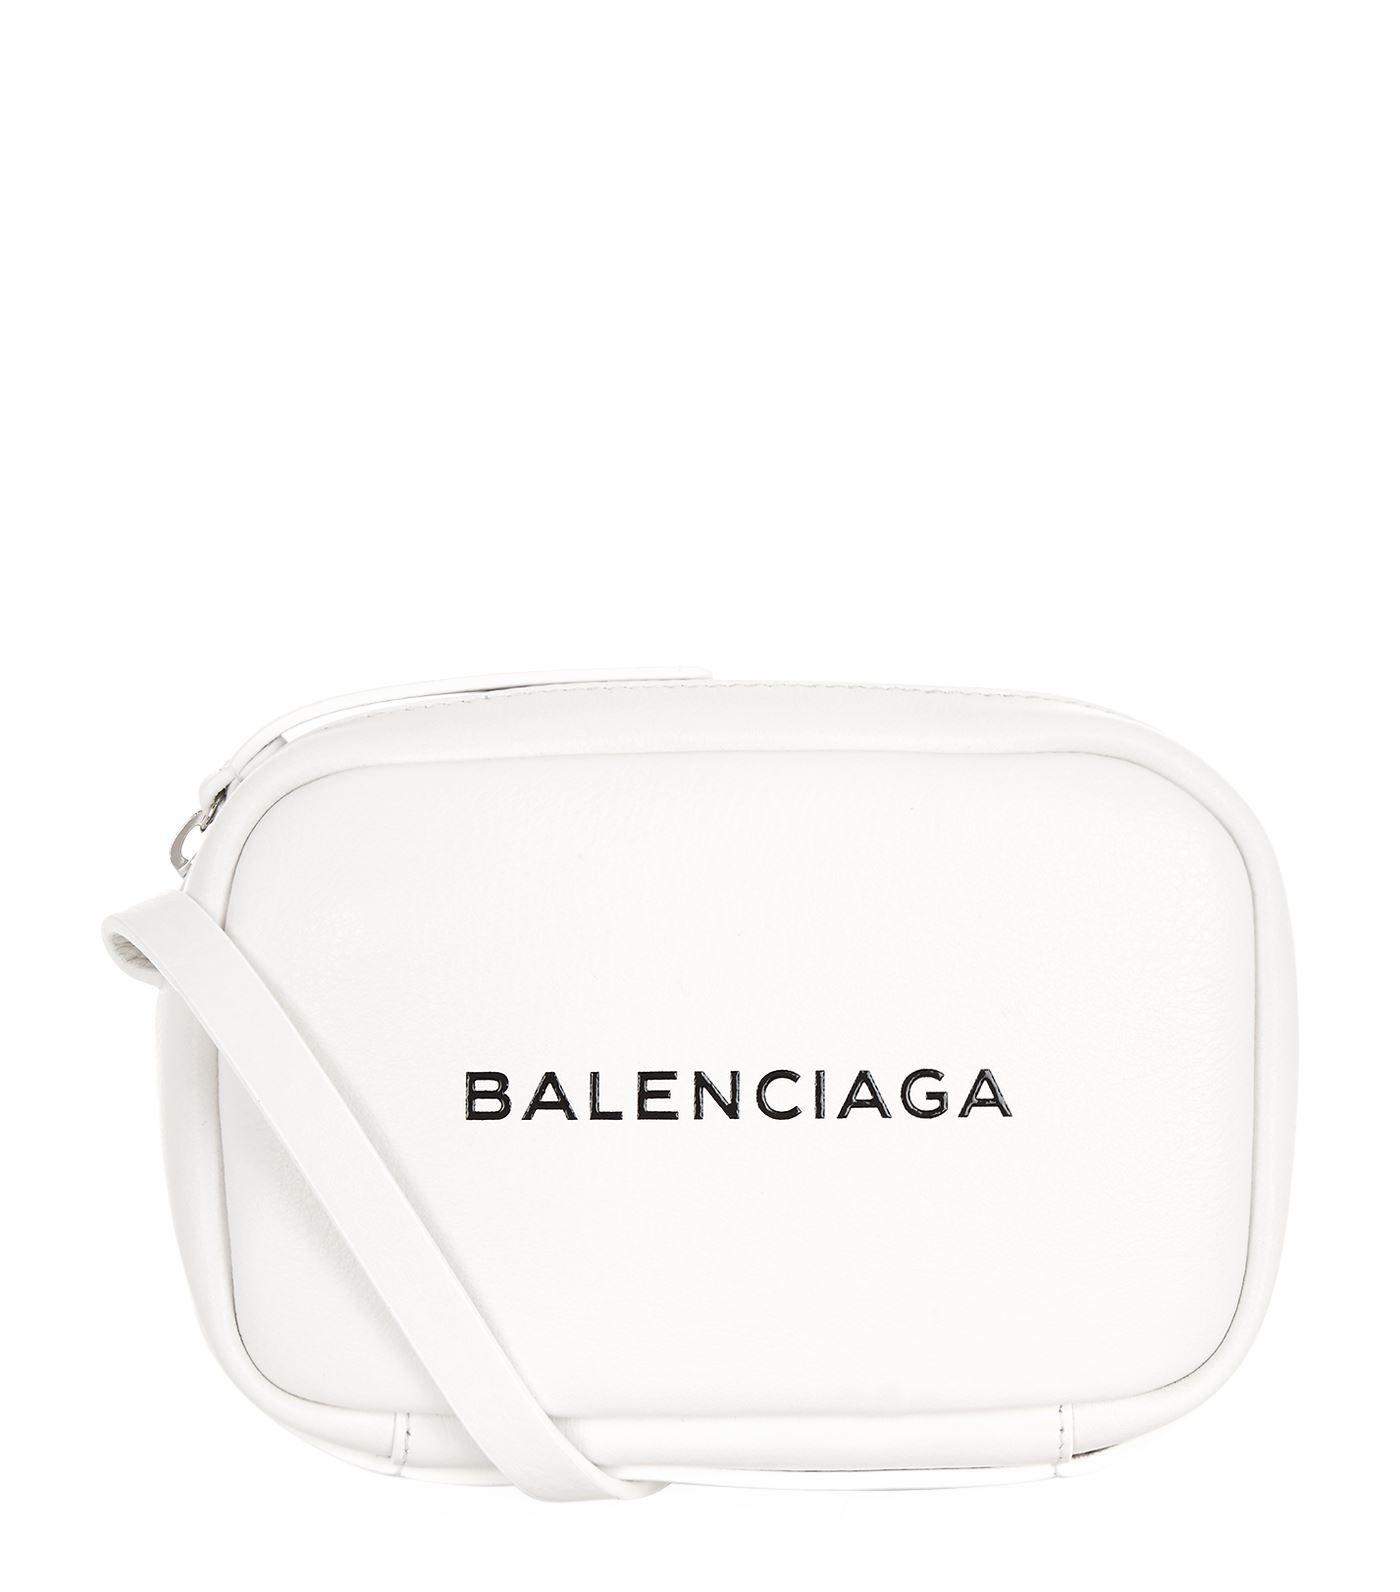 Balenciaga Leather Everyday Mini Camera Bag in White - Lyst